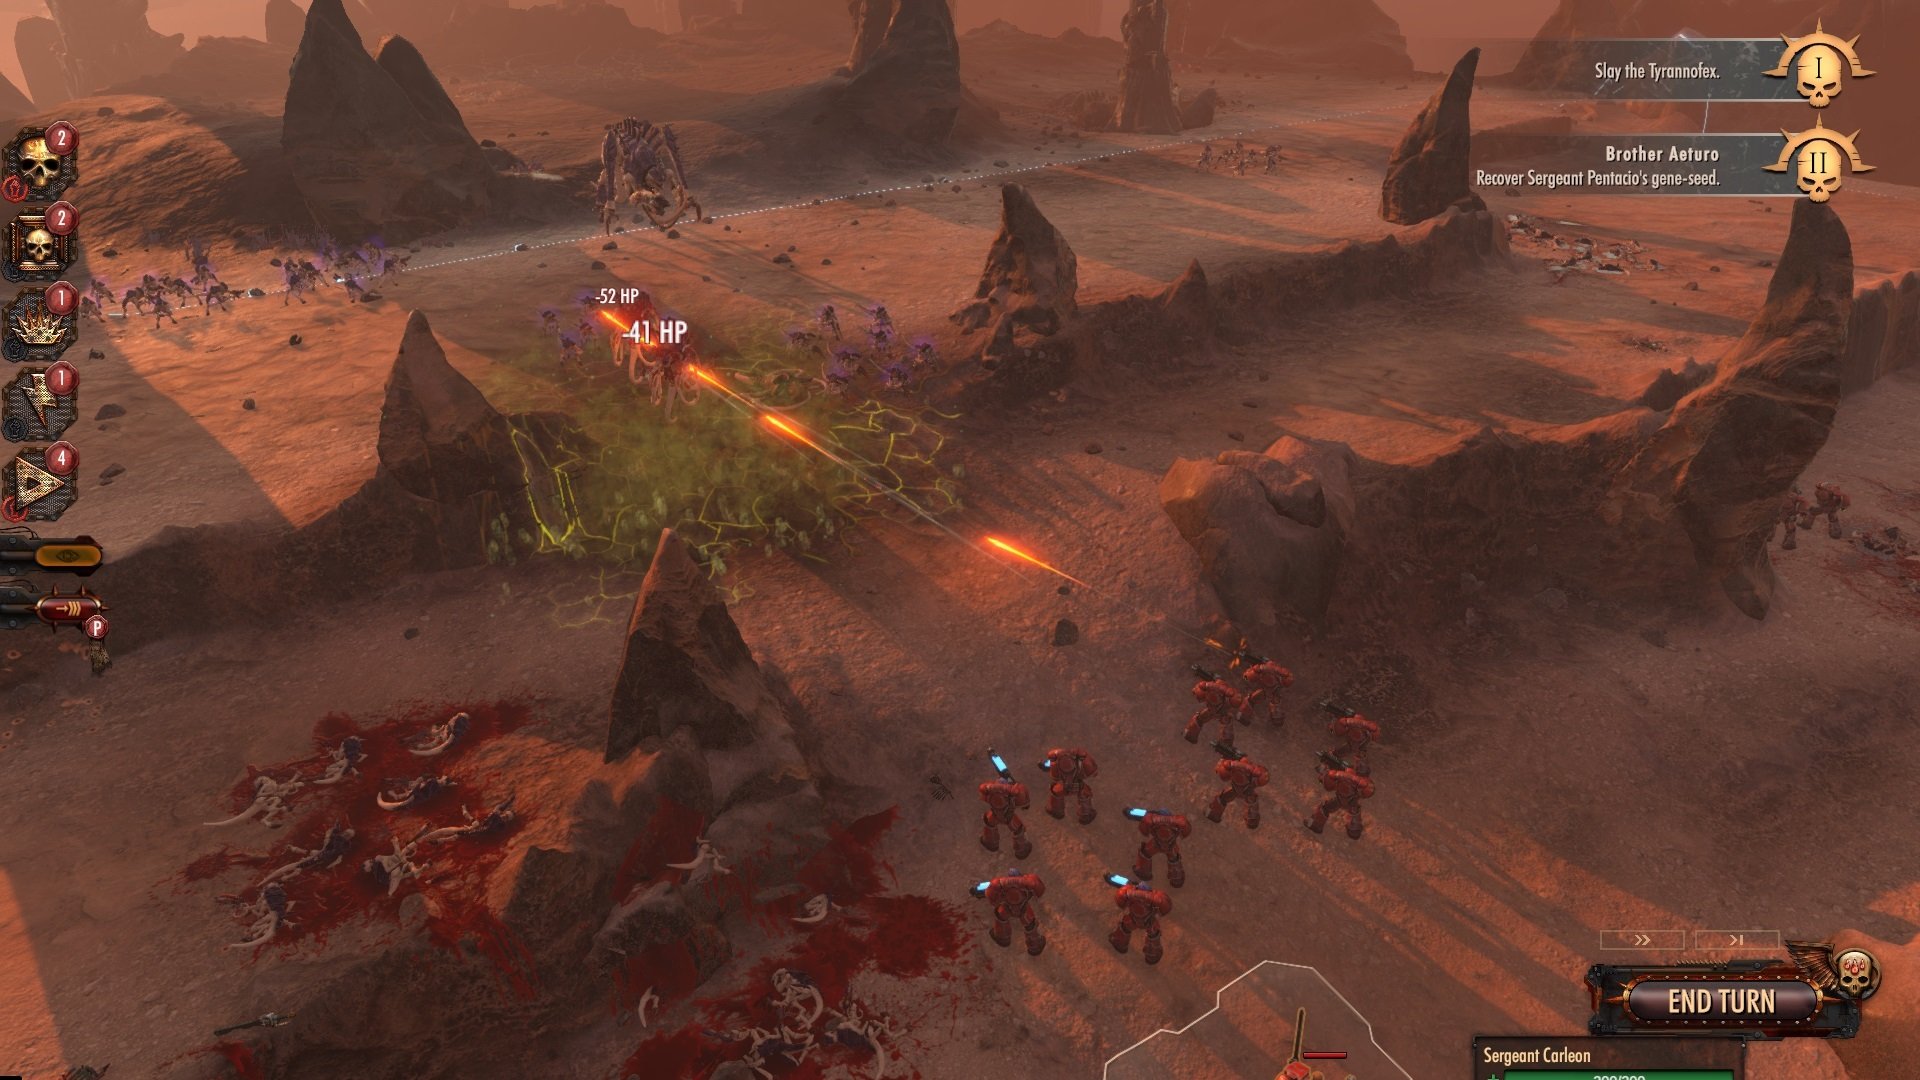 Скриншот 2 к игре Warhammer 40000: Battlesector v.1.04.82 [GOG] (2021)